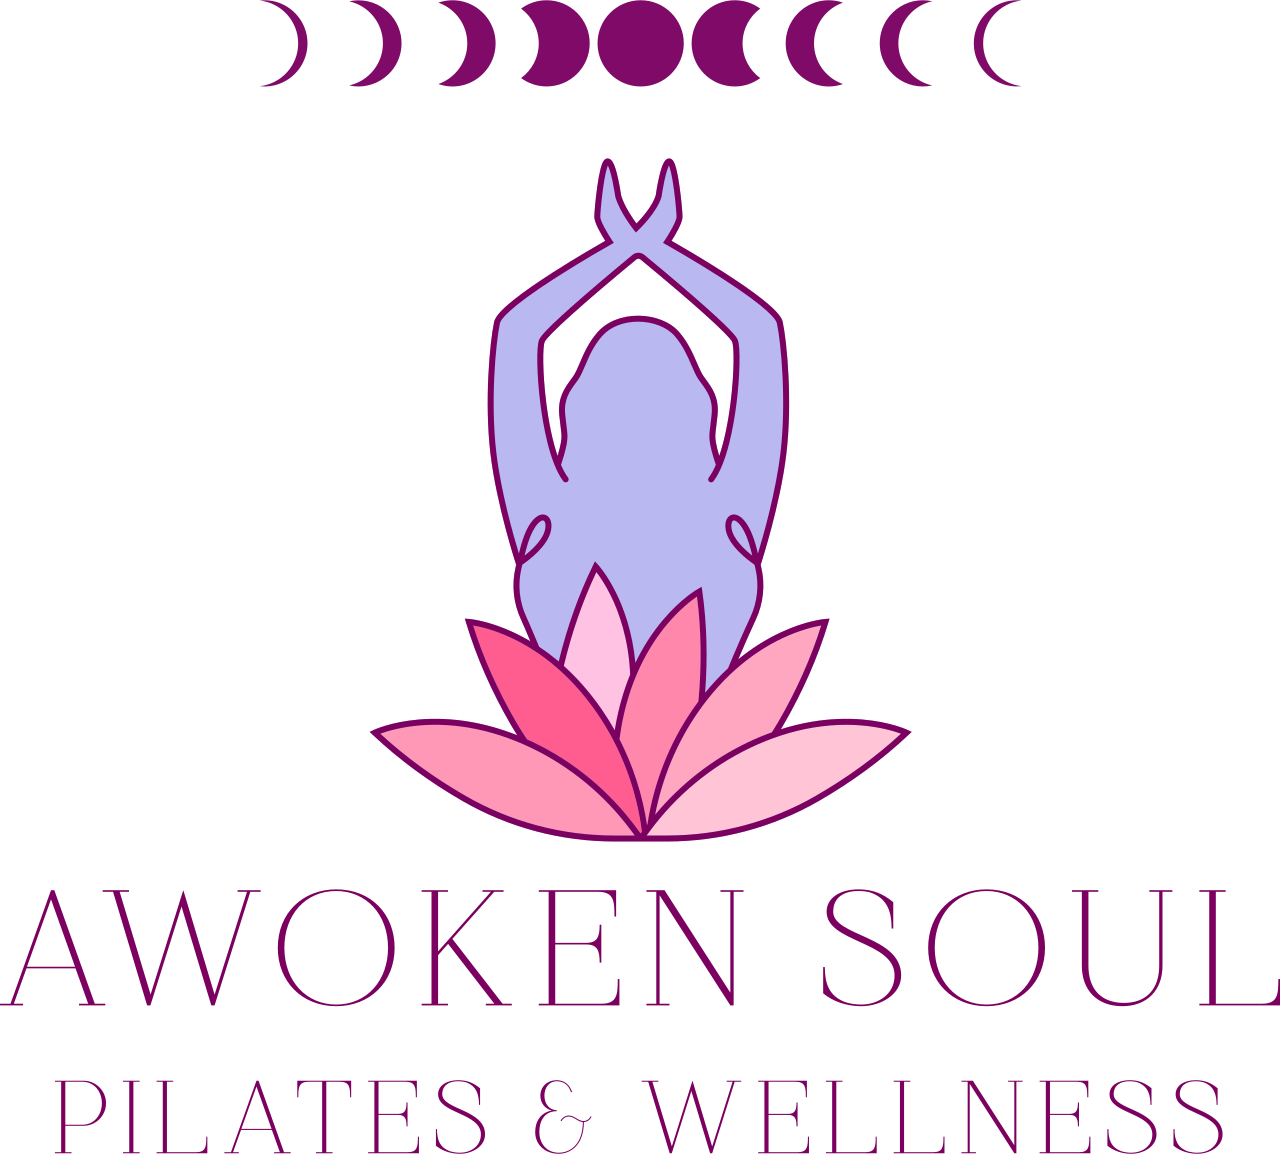 Awoken Soul's logo